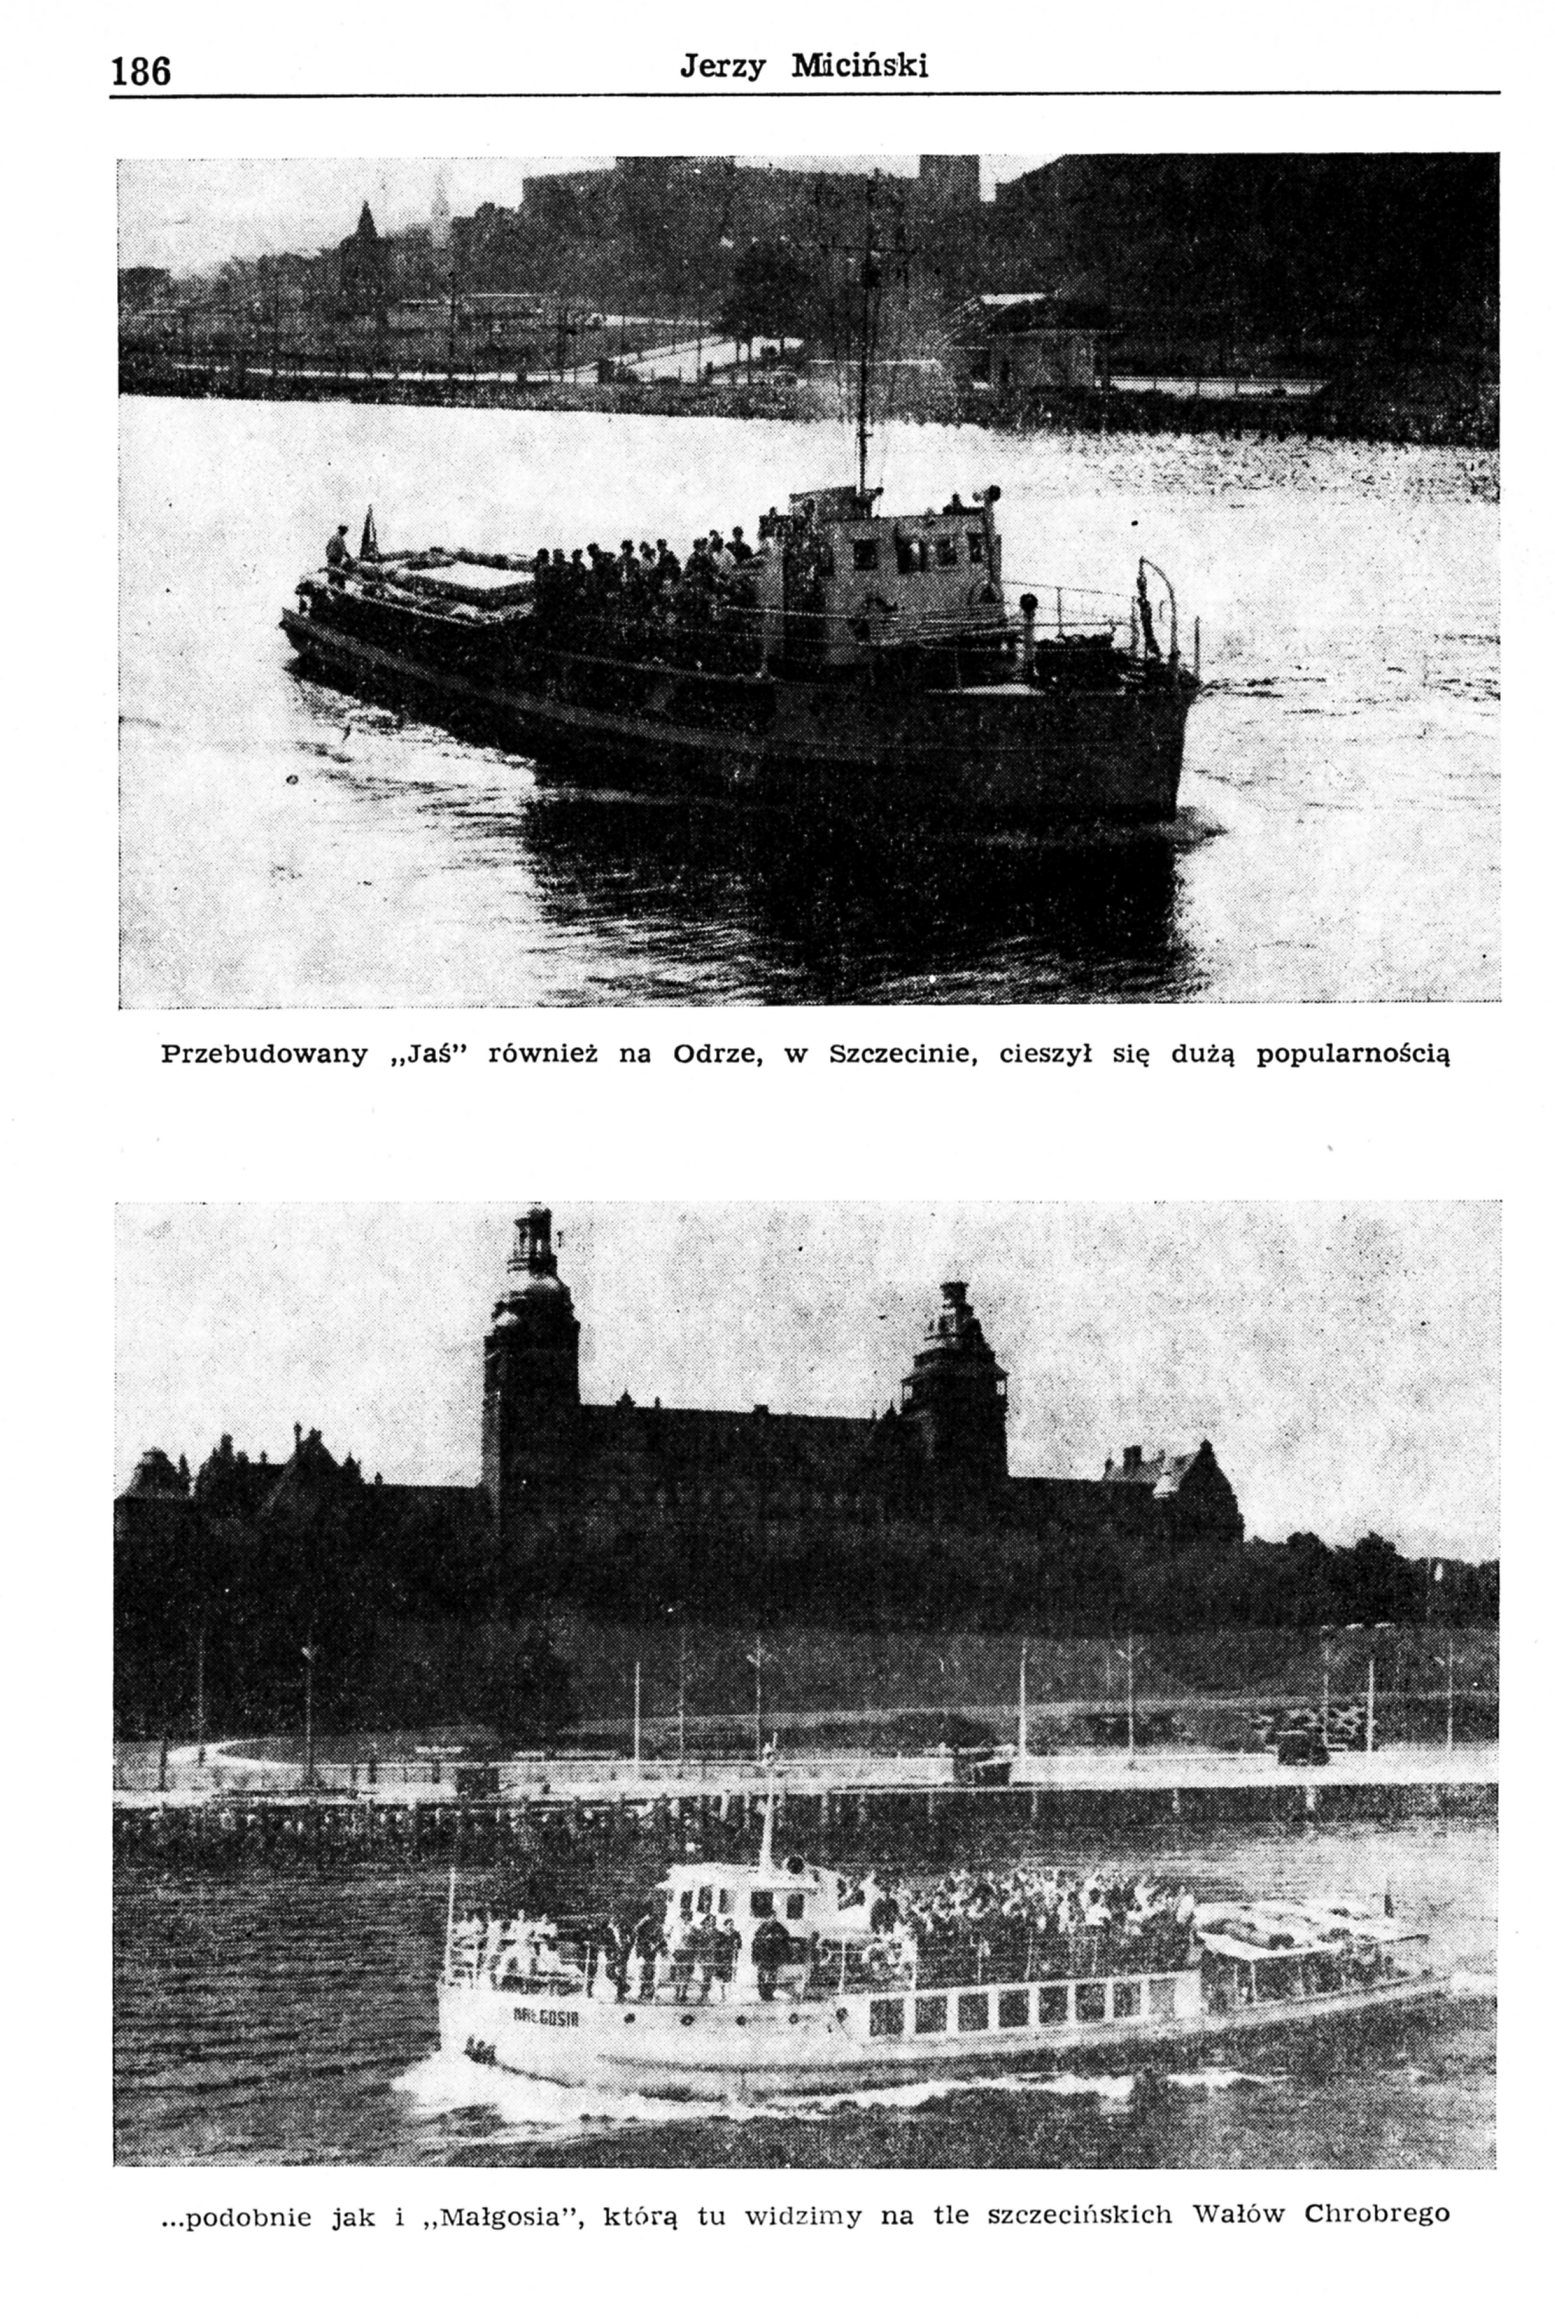 Gdyńska biała flota 11926-1939 (3)